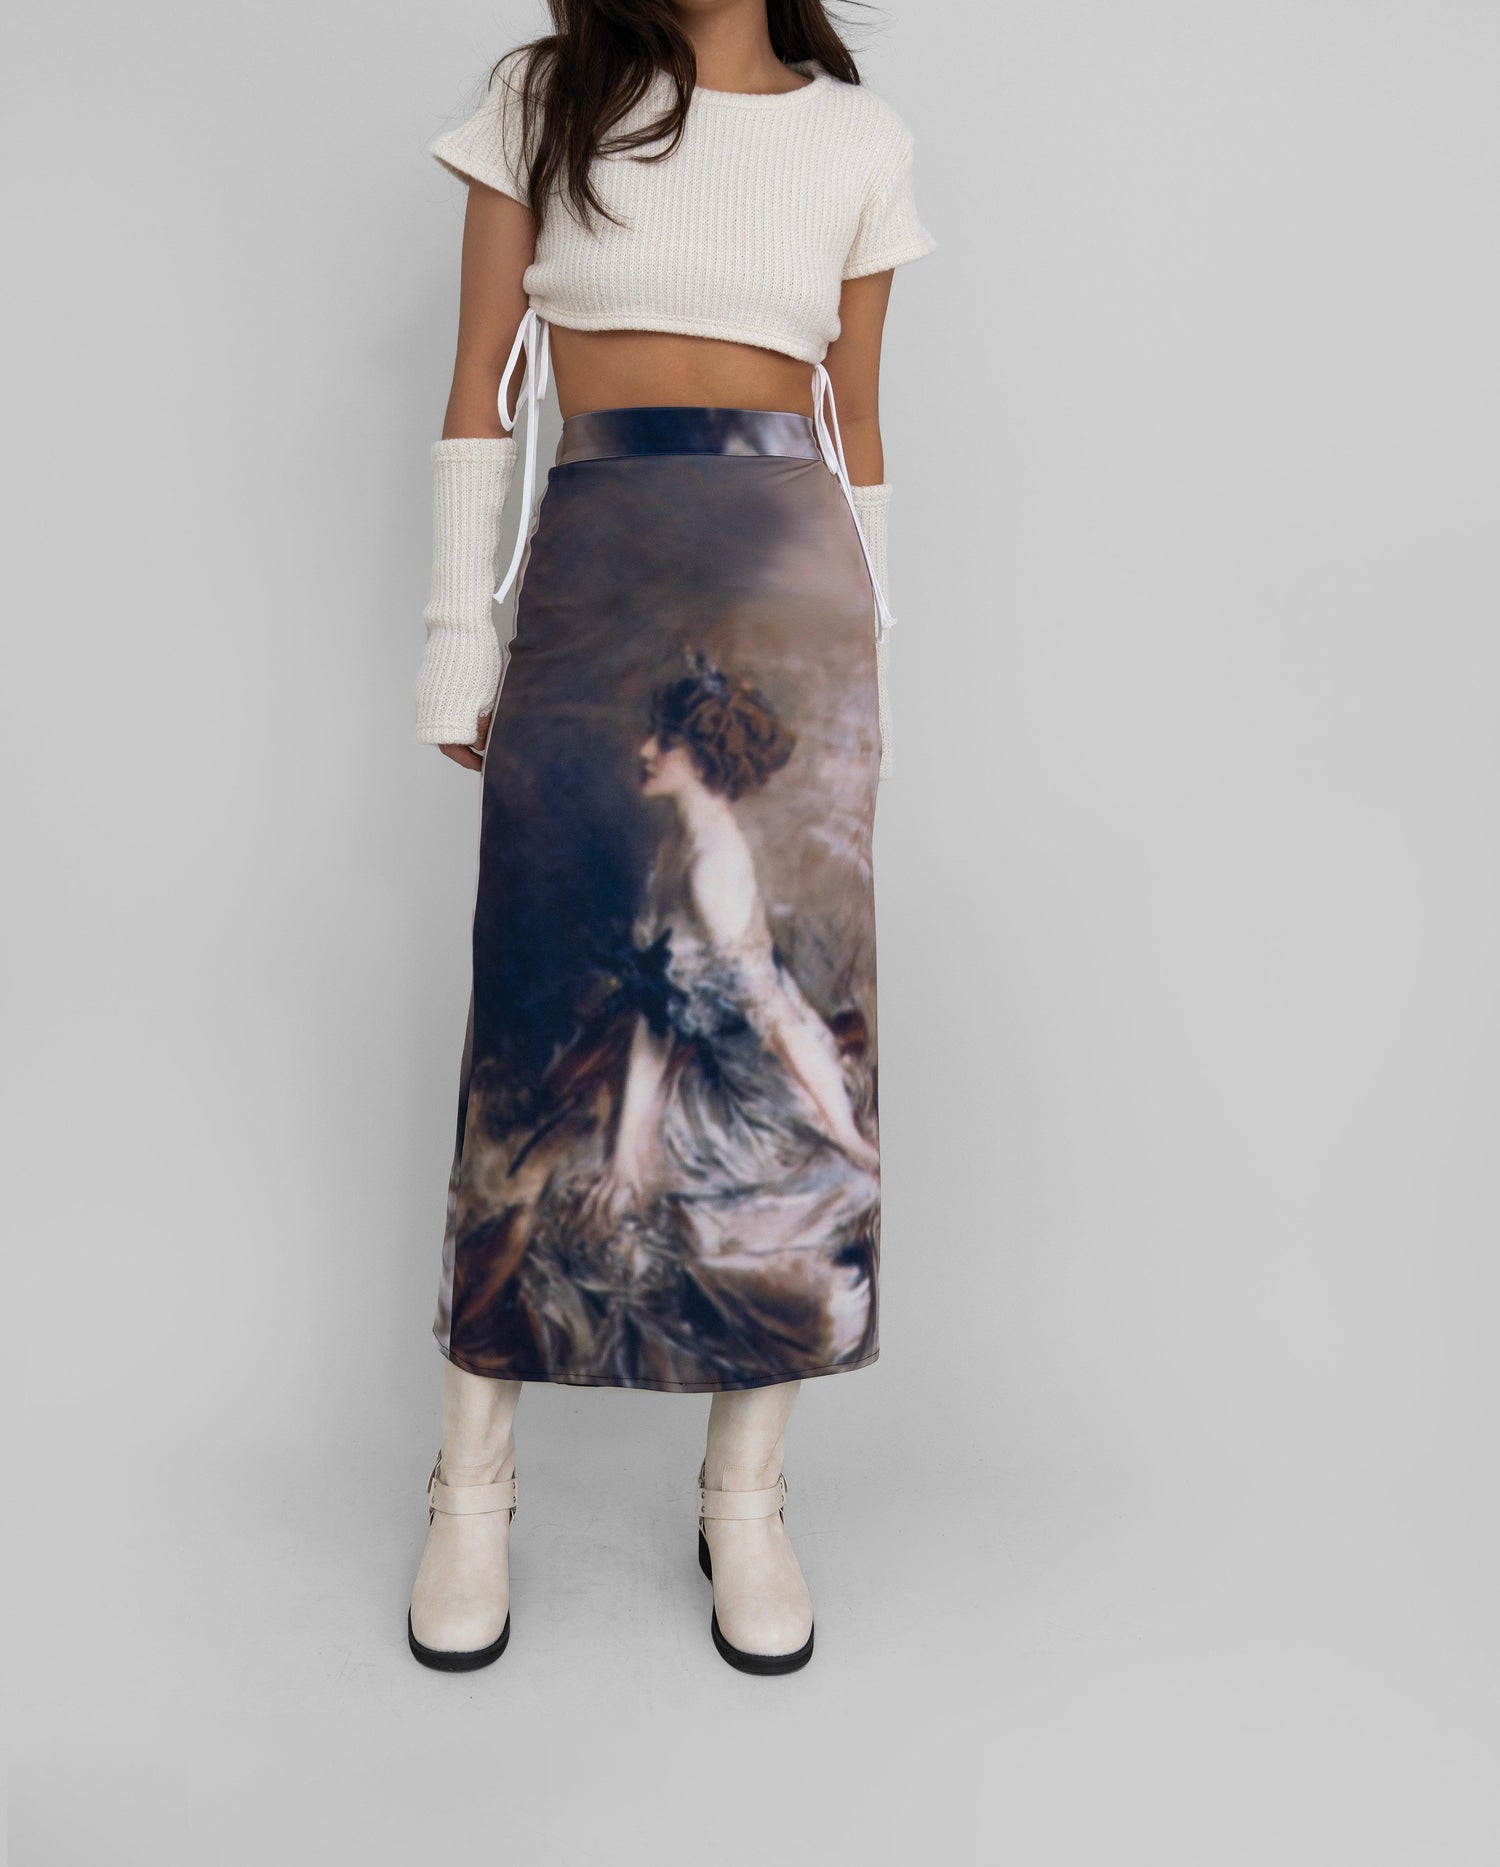 Naya Graphic Printed Long Skirt / Brown Multi - The Bekk